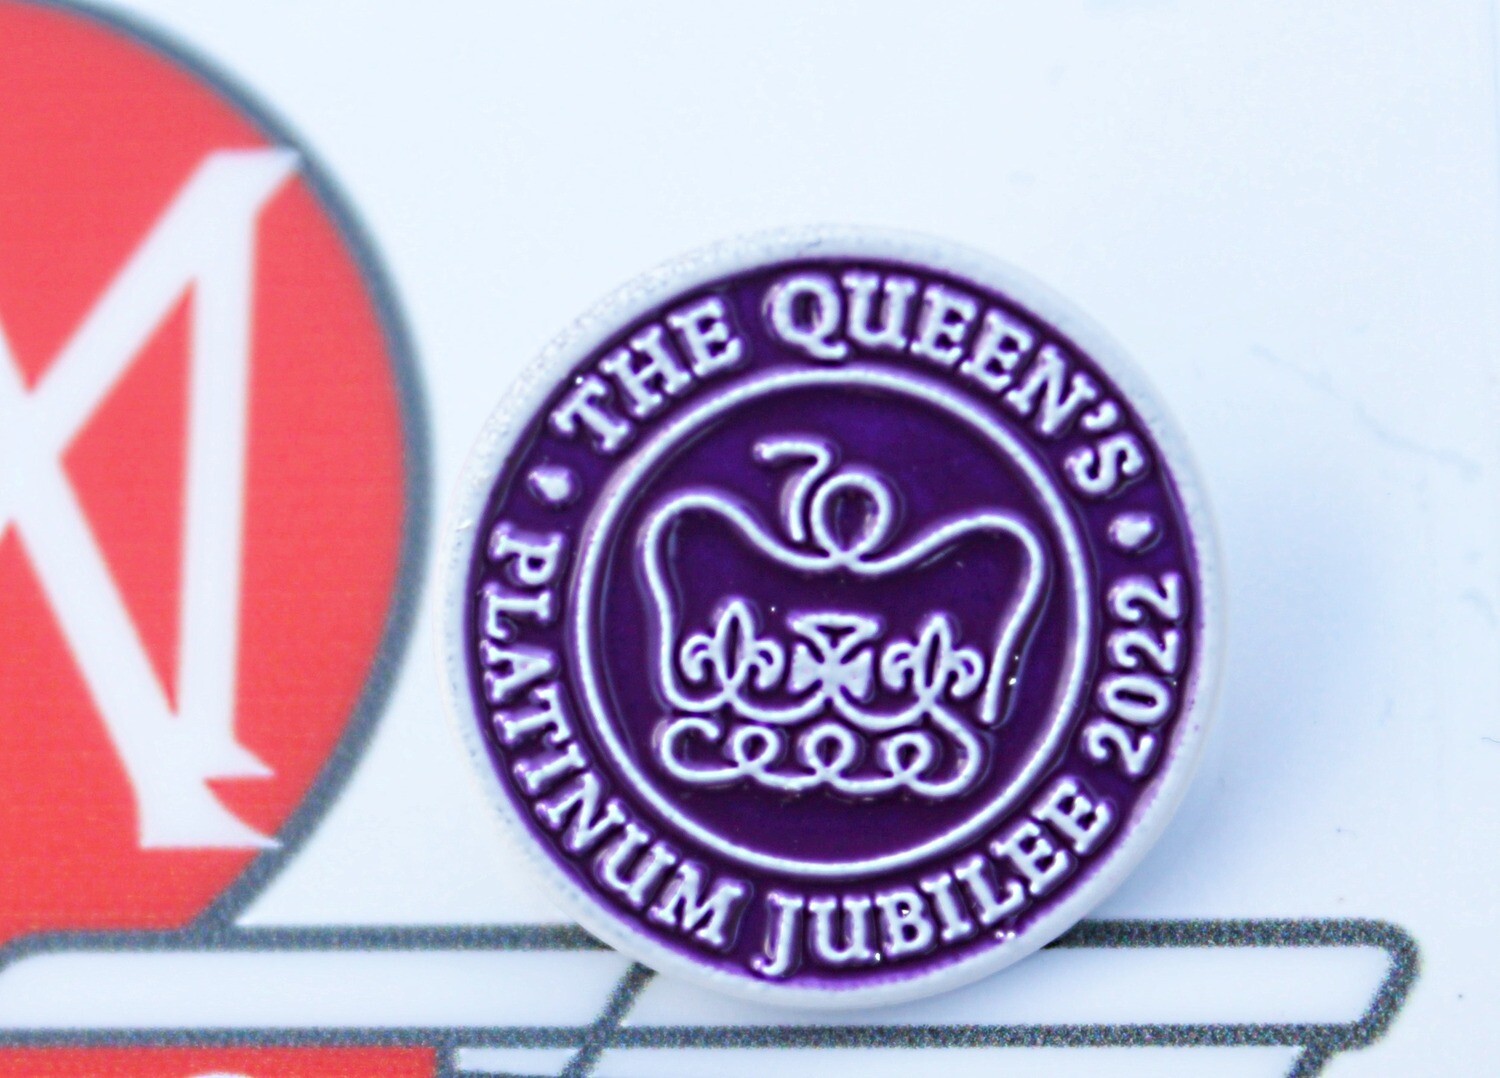 Royal Jubilee Pin